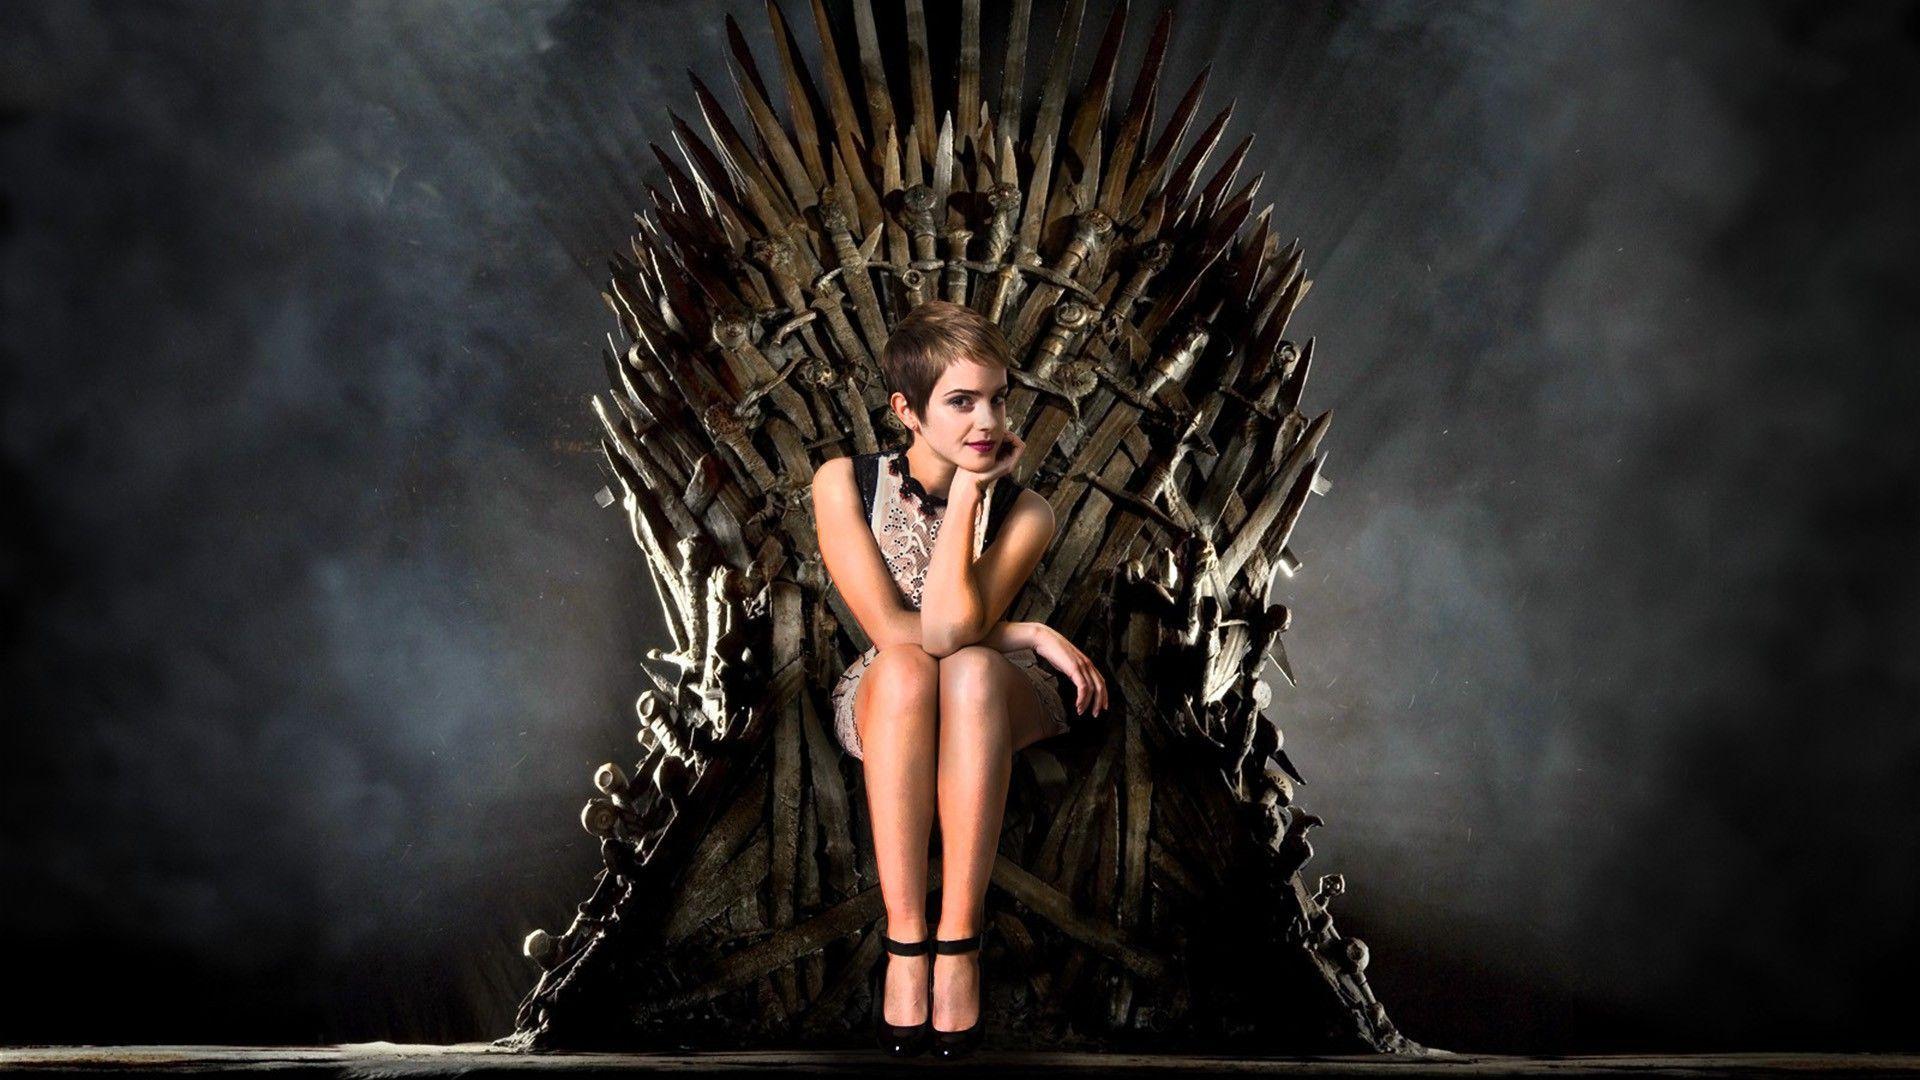 Emma Watson on the Iron Throne Wallpaper